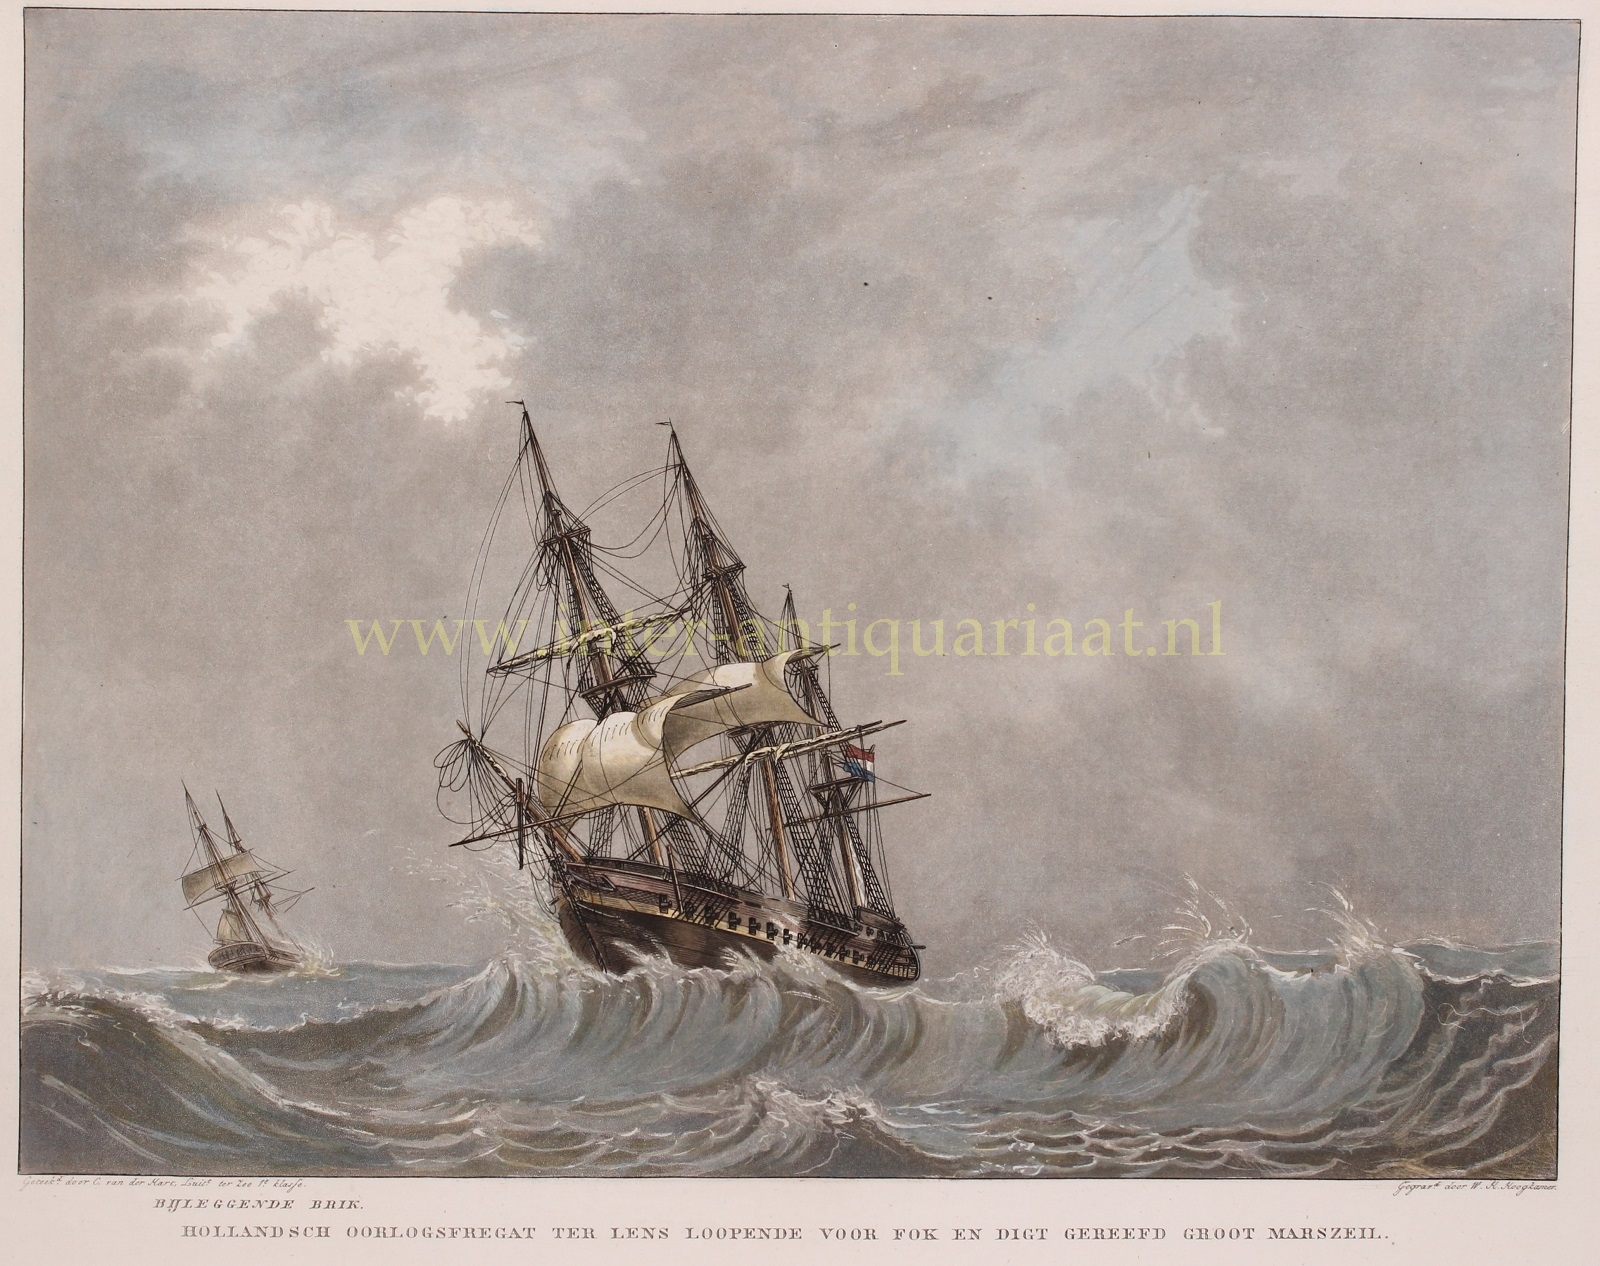 Hoogkamer-- W.H. - Dutch frigate - Willem Hendrik Hoogkamer after Christoffel van der Hart, c. 1830